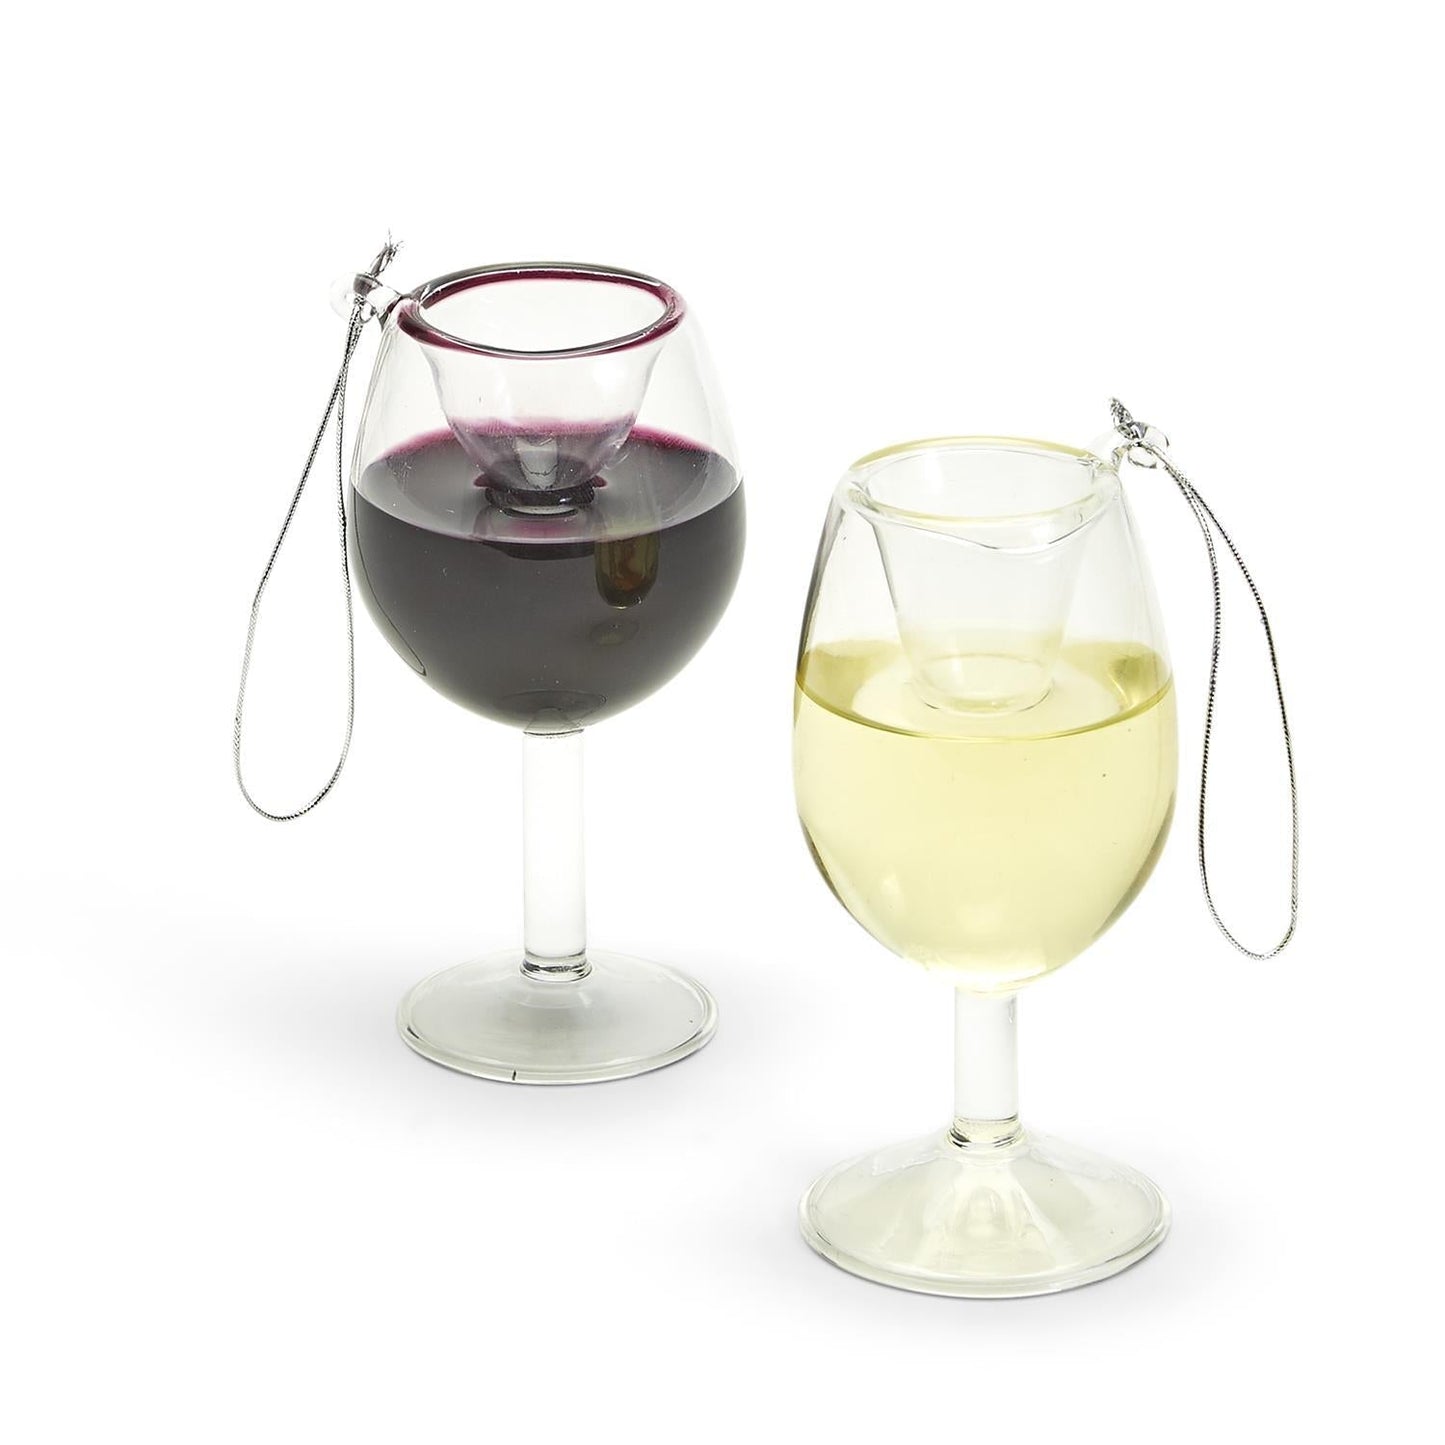 The Bullish Store - Hand-Crafted Glass Ornaments - Wine, Martini, or Margarita